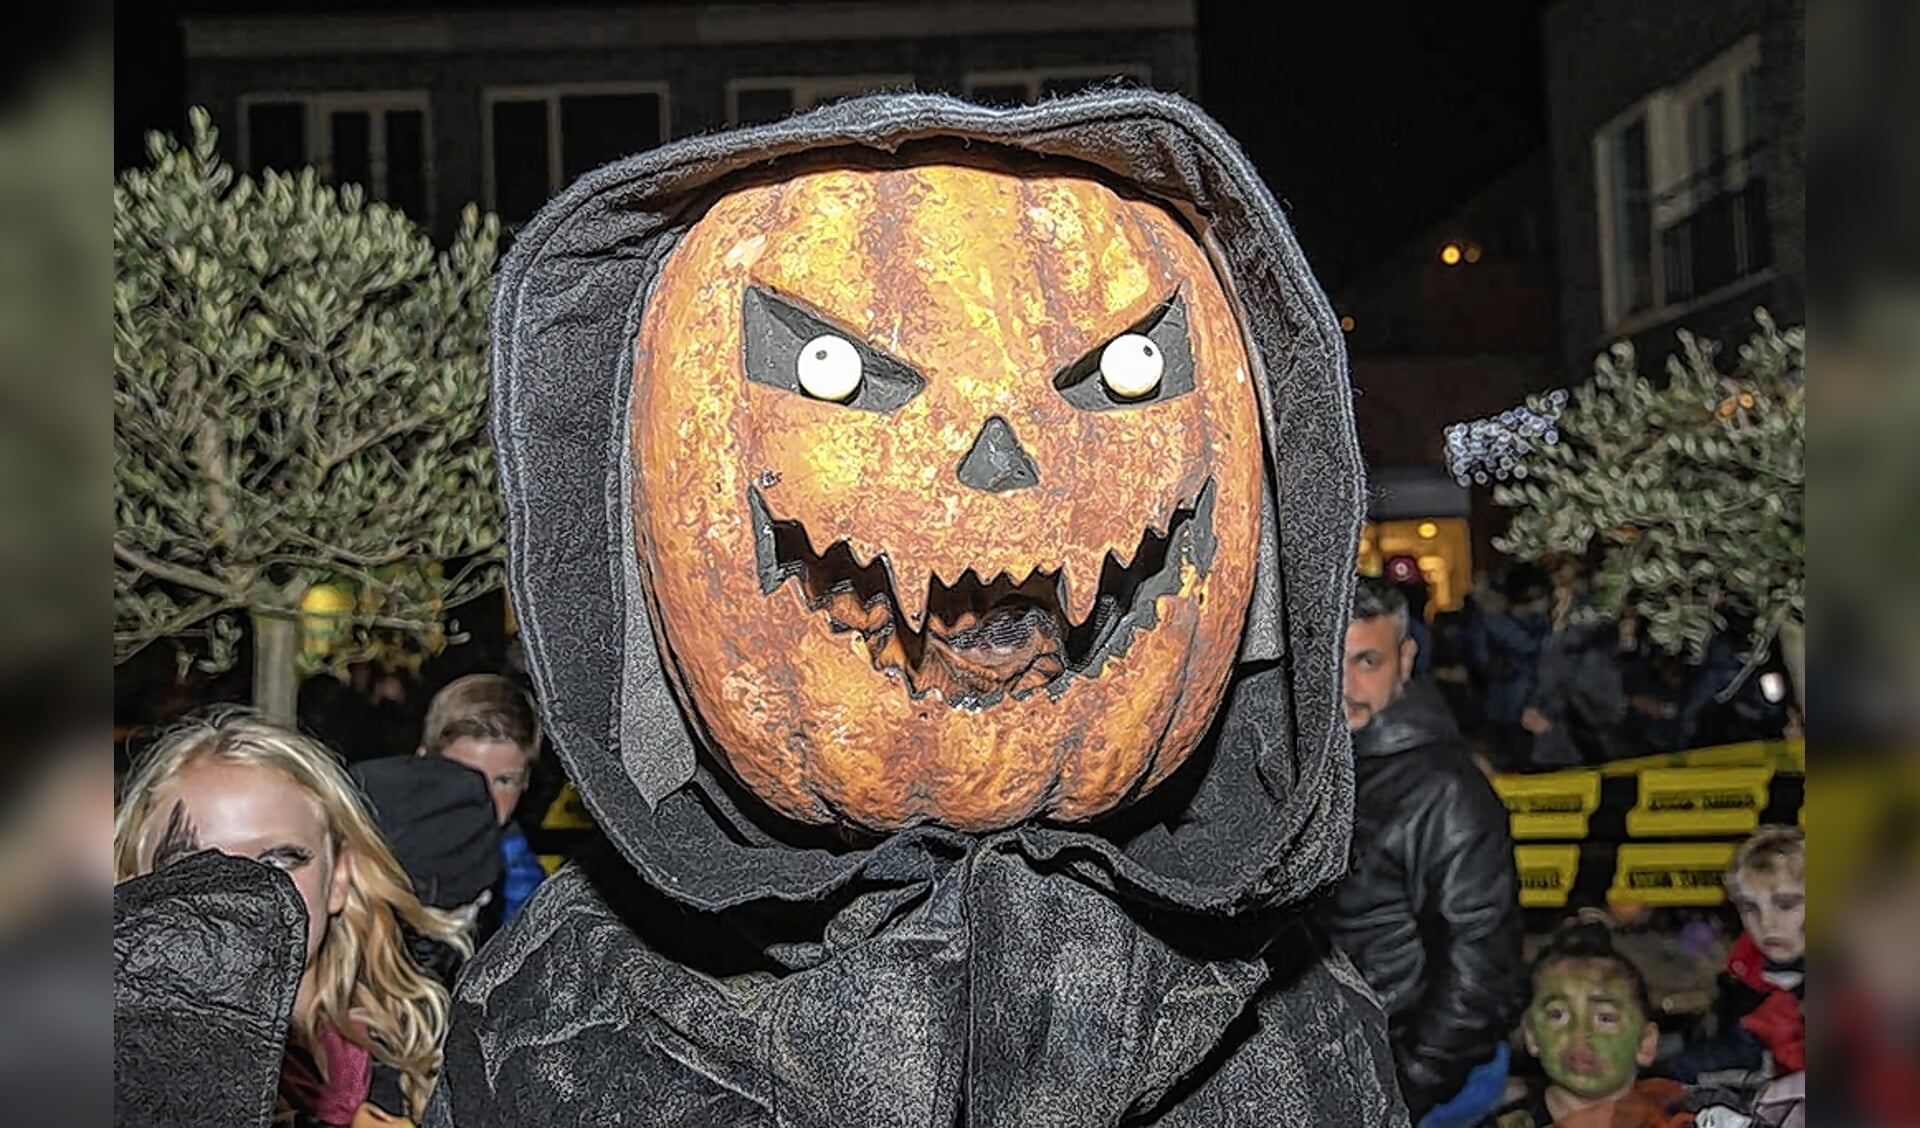 Halloweenfeest Getsewoud moest zo'n duizend euro aan leges betalen.